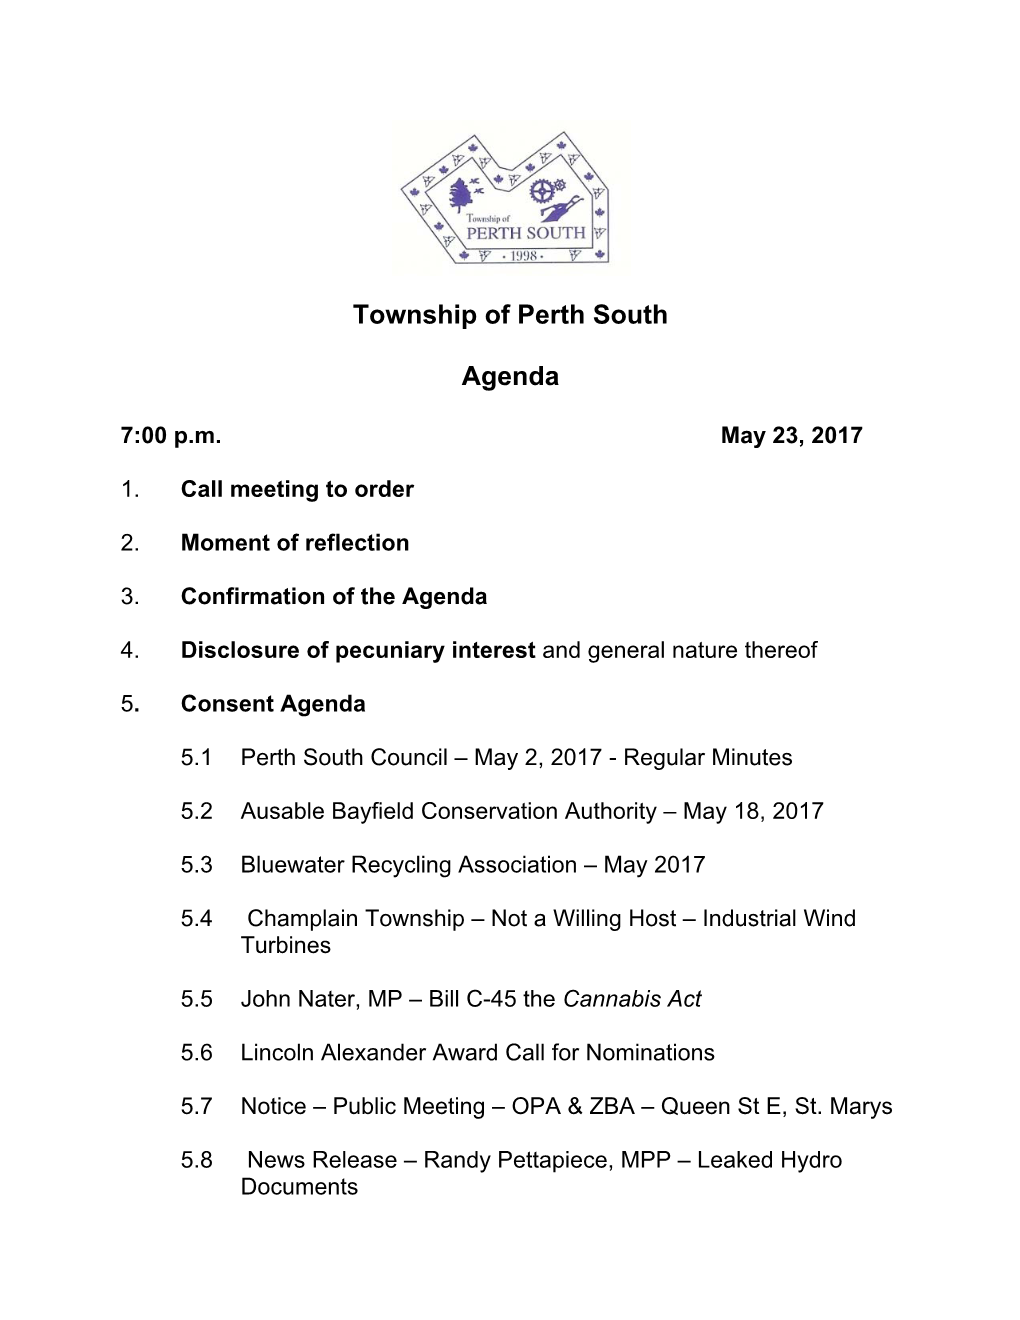 Township of Perth South Agenda